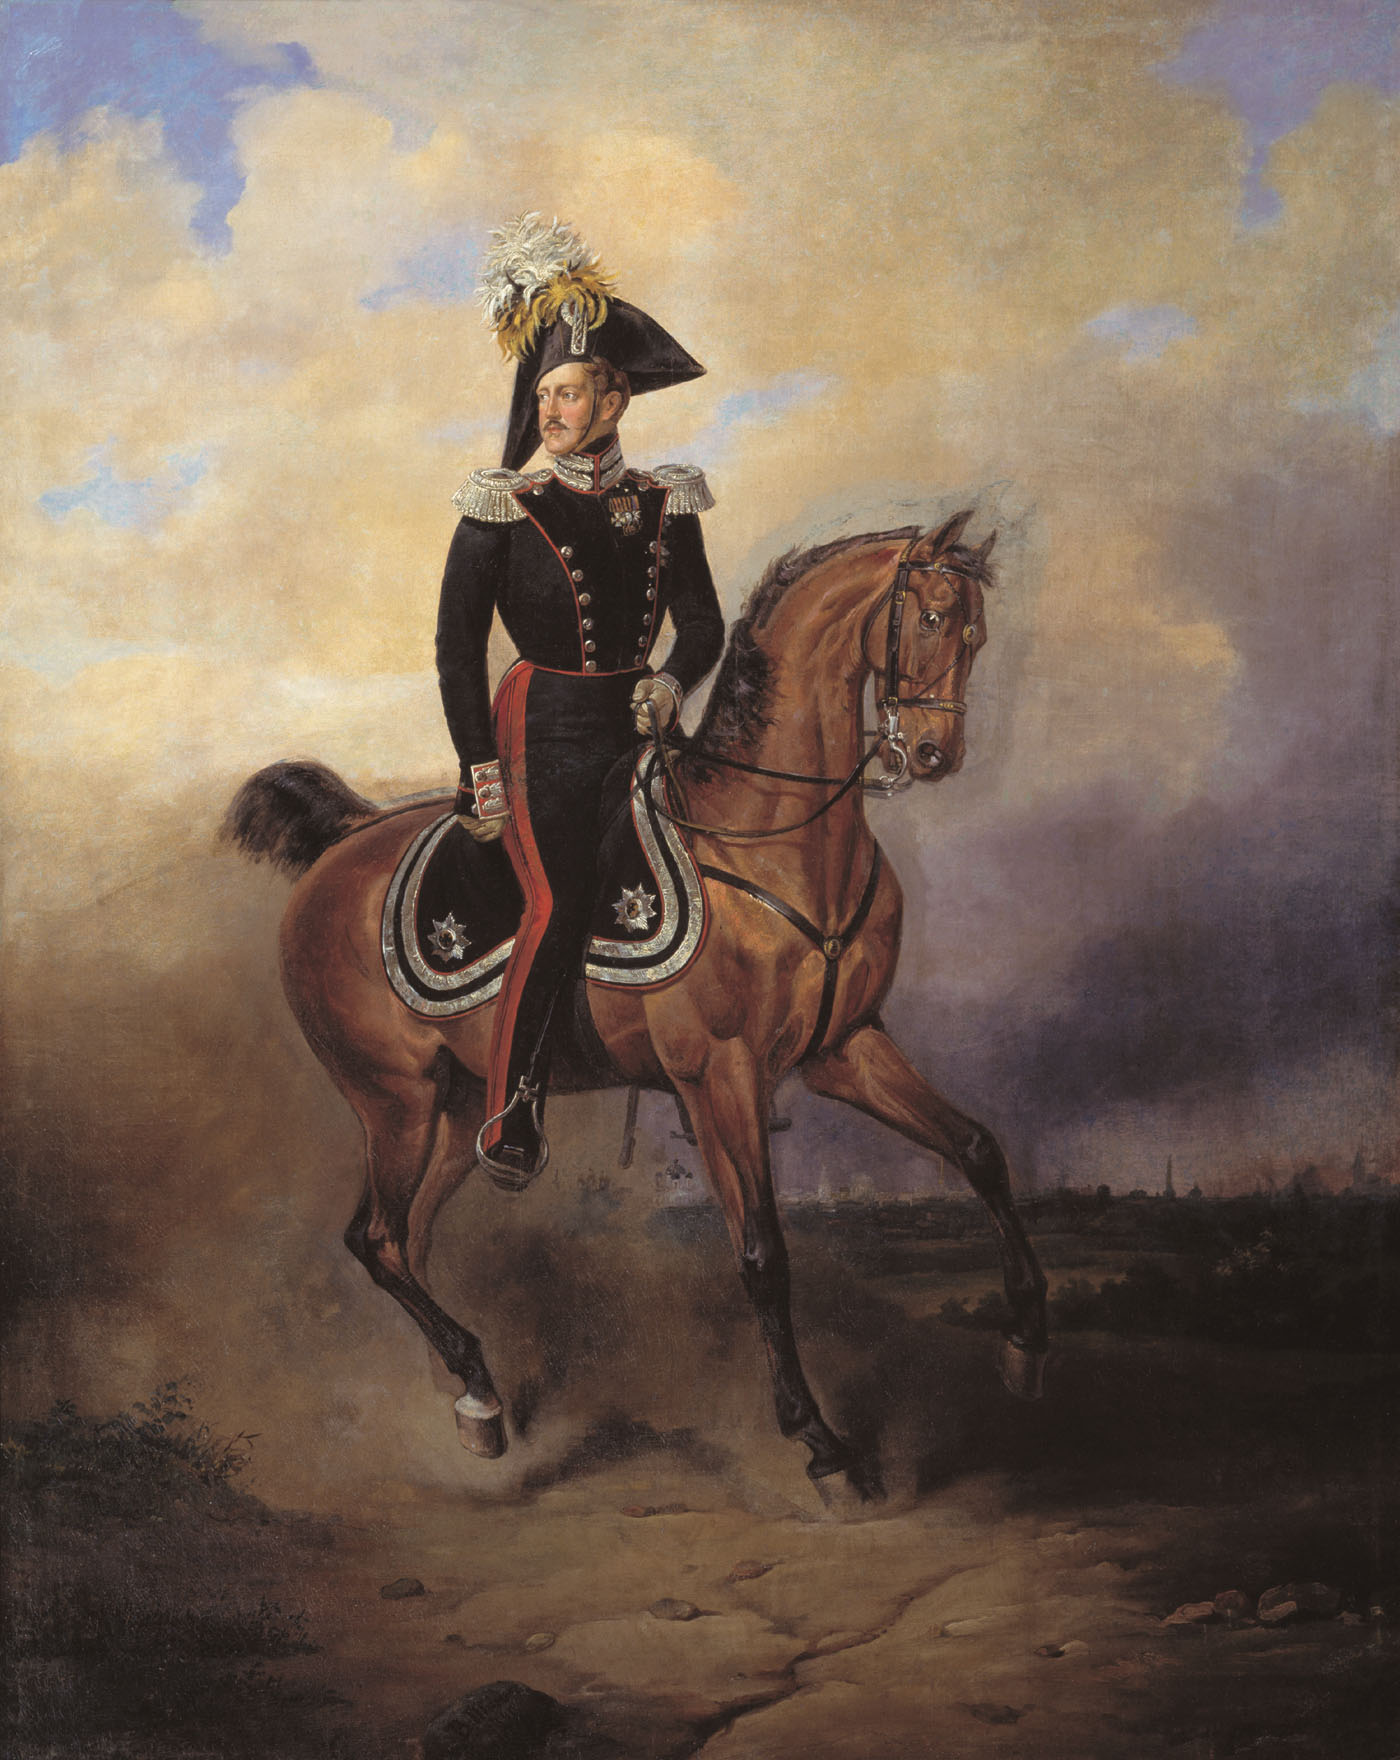 Тимм. Портрет императора Николая I на коне. 1840